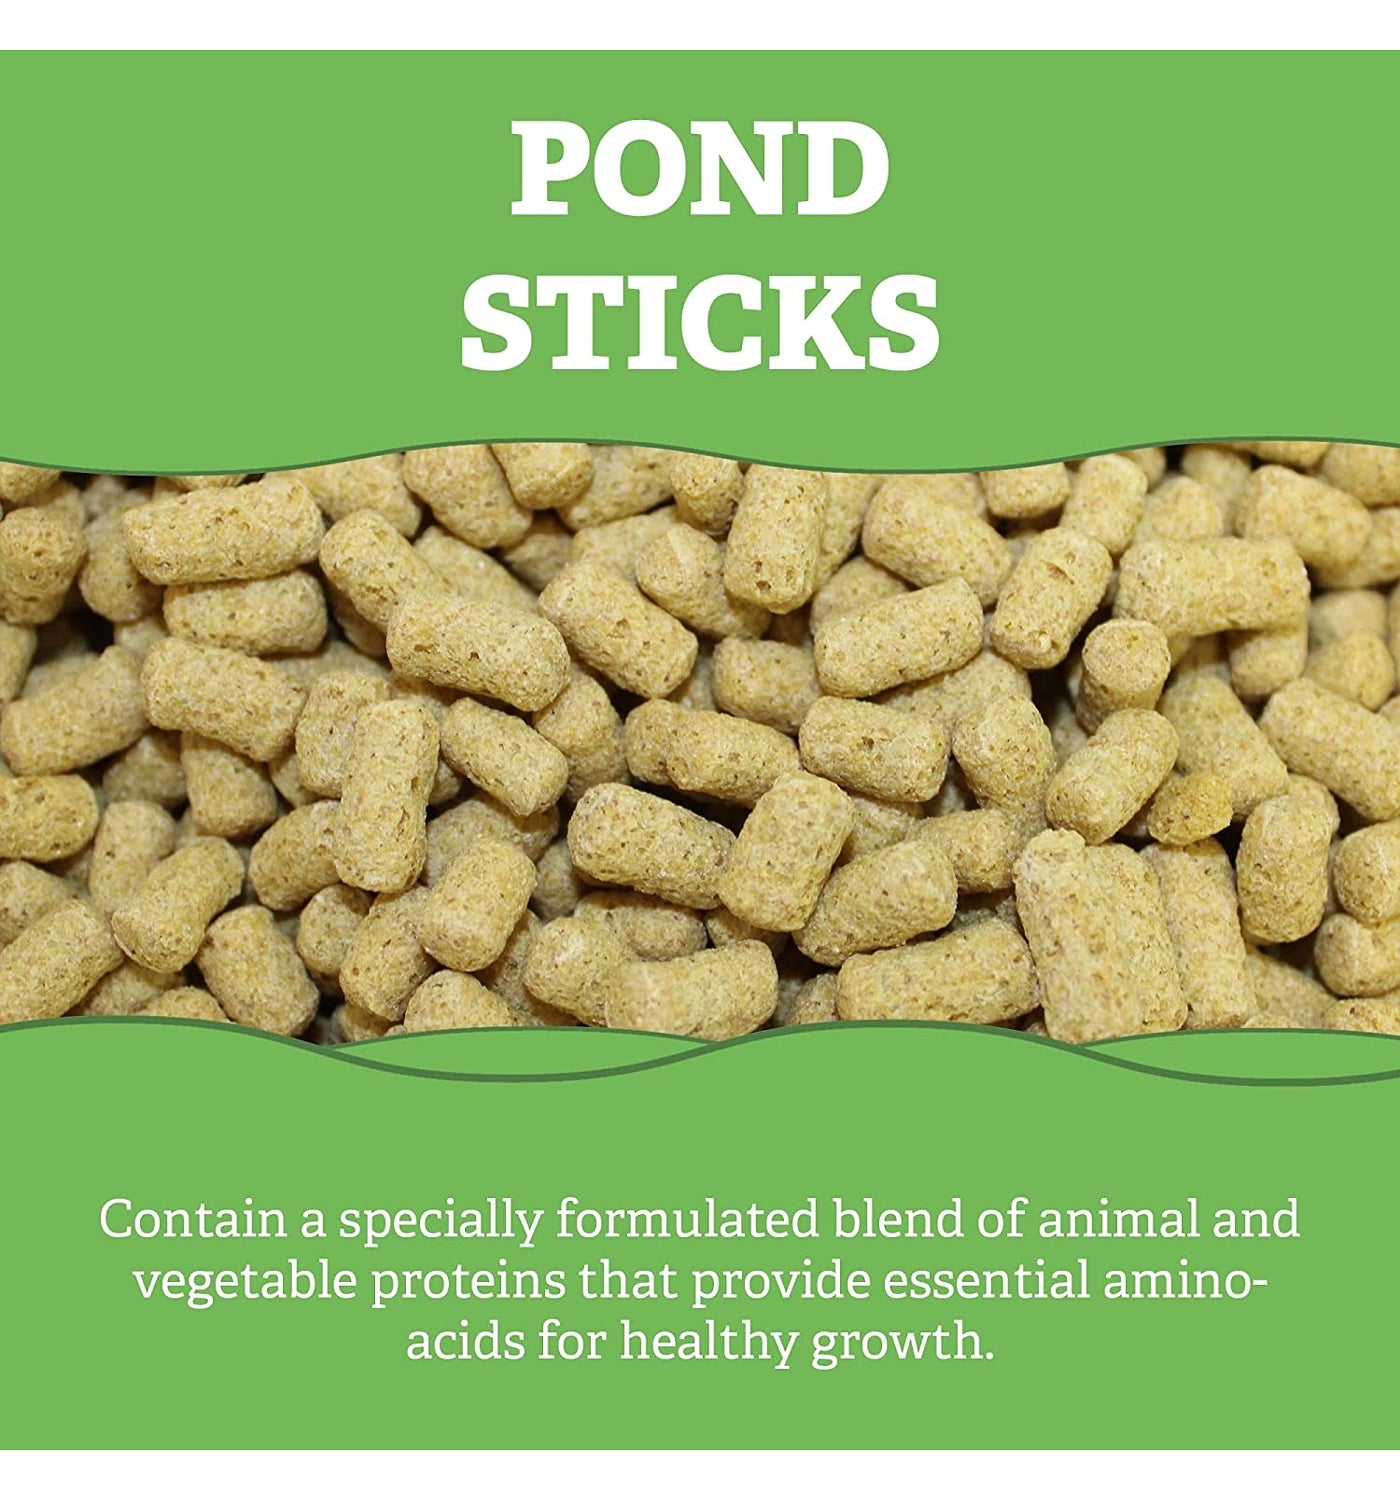 Pets Choice - Pond Sticks - 5kg